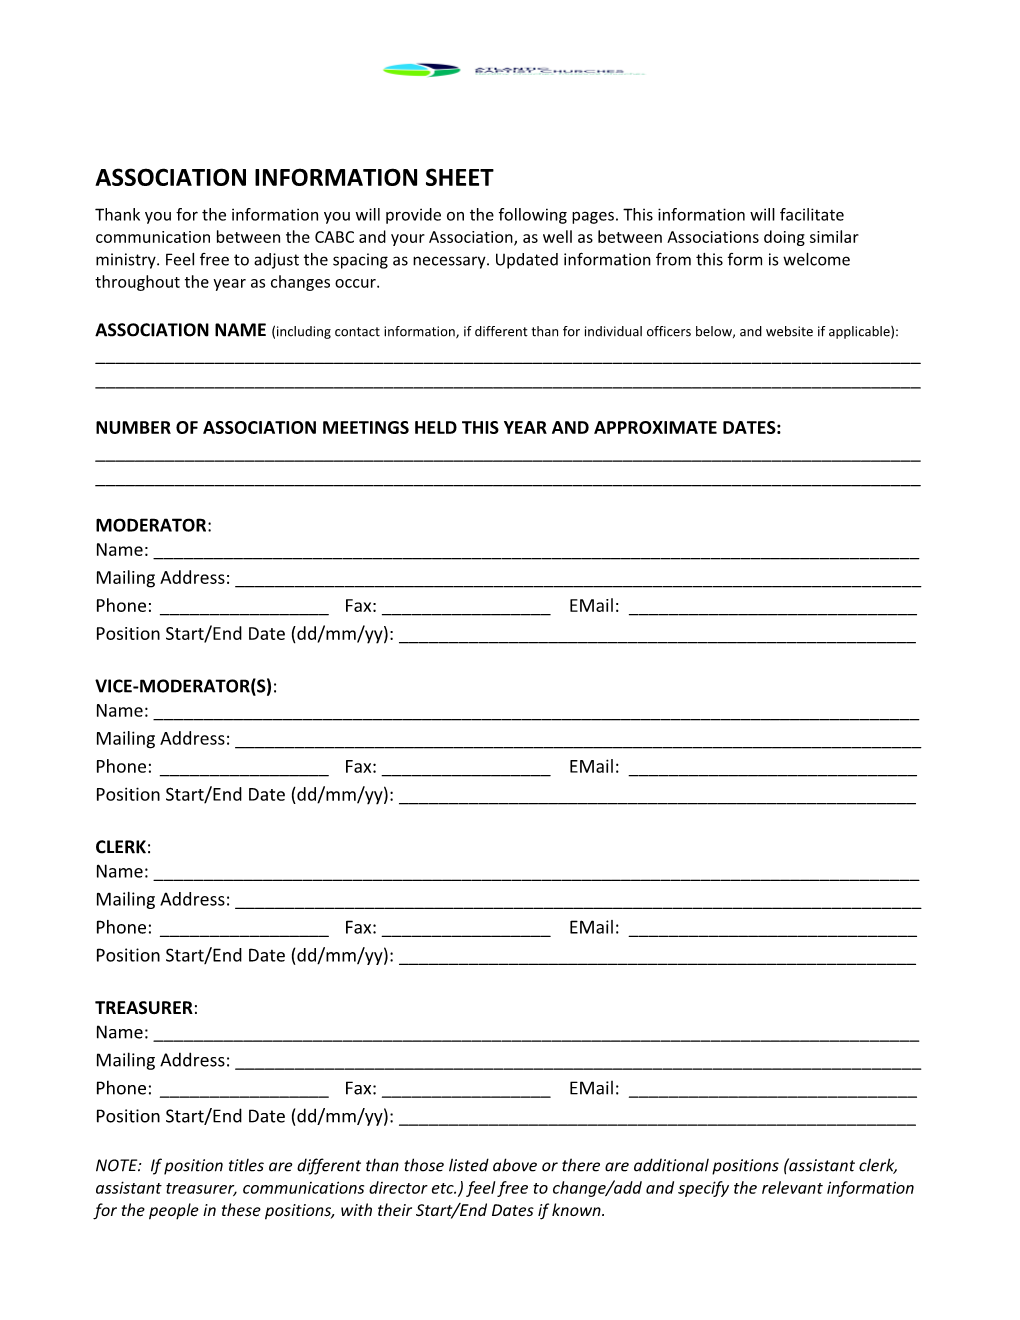 Association Information Sheet